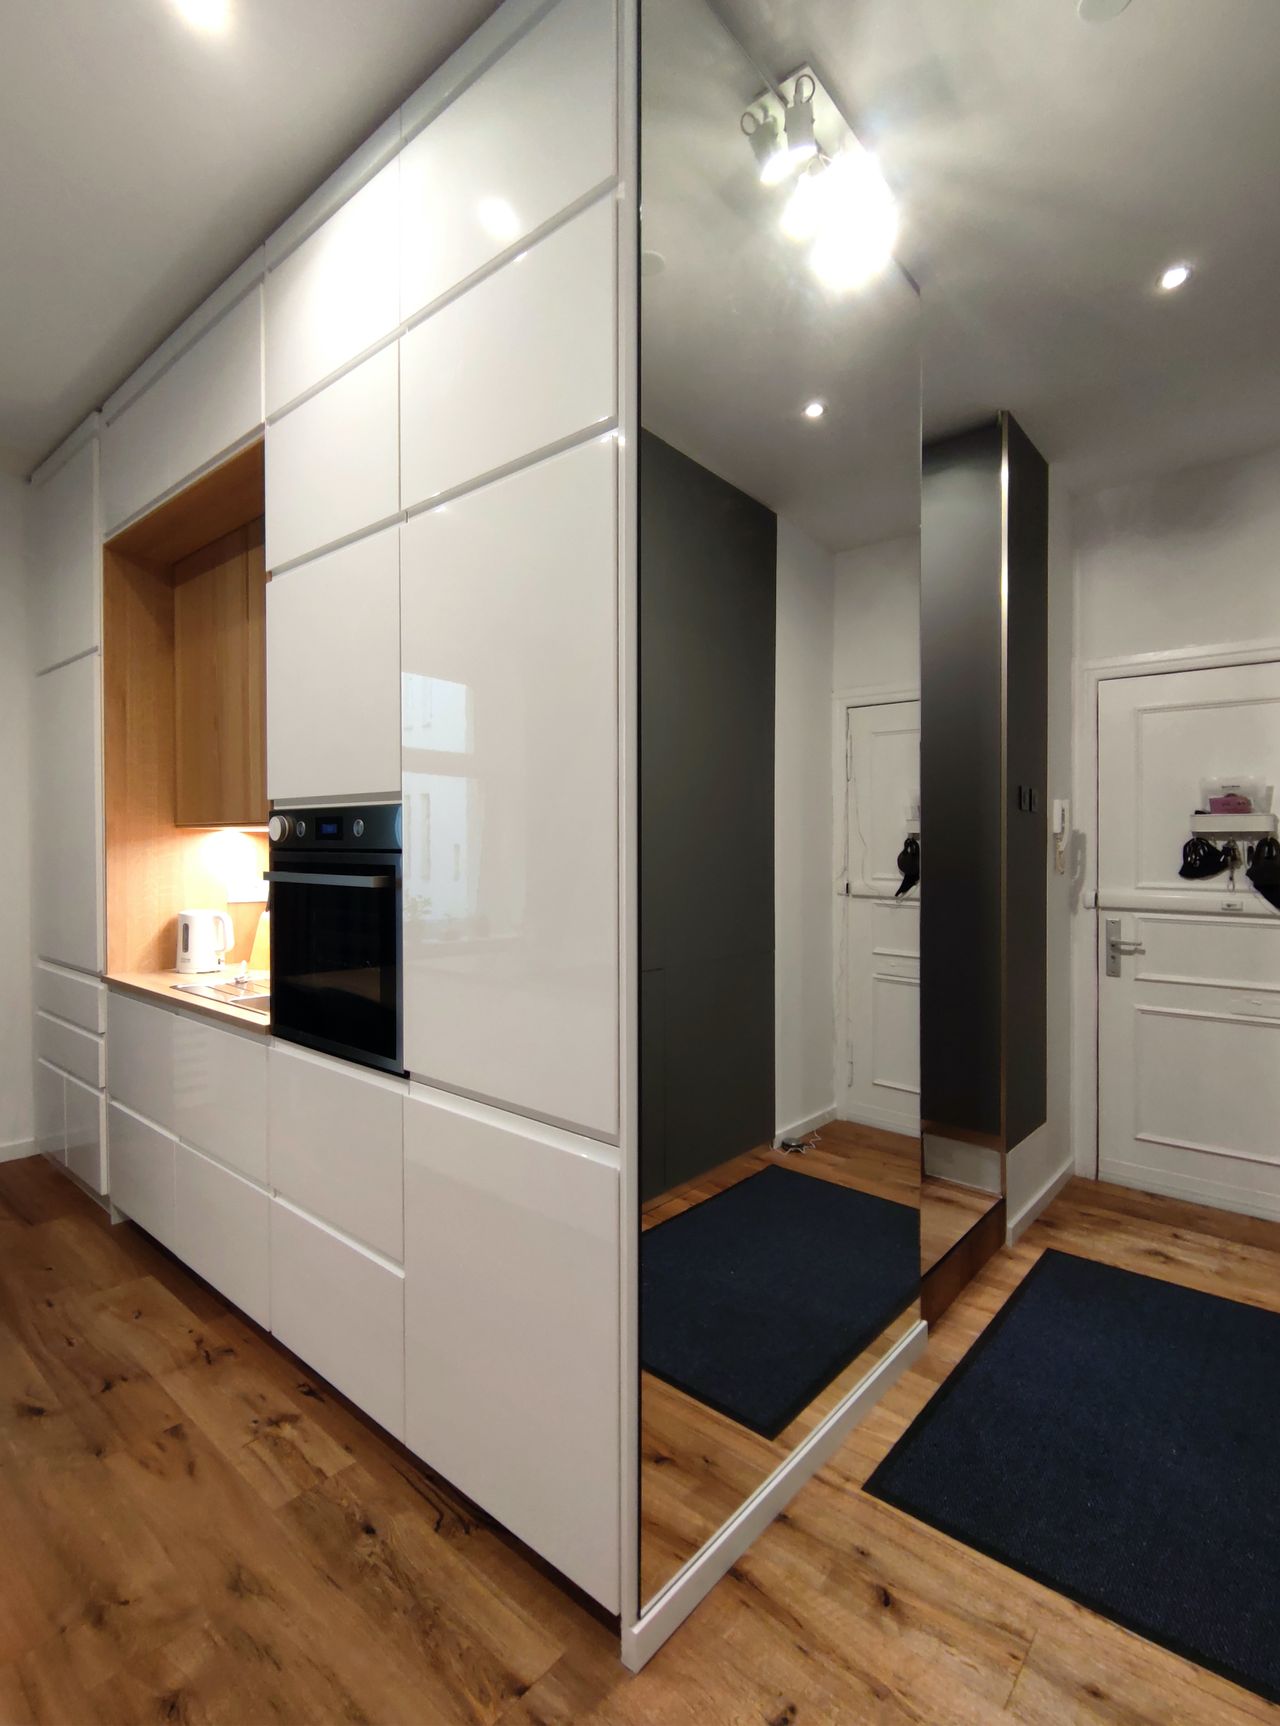 Occupancy after modernisation/renovation/reconstruction: modern 1.5 room apartment including built-in kitchen located in Tiergarten, Berlin